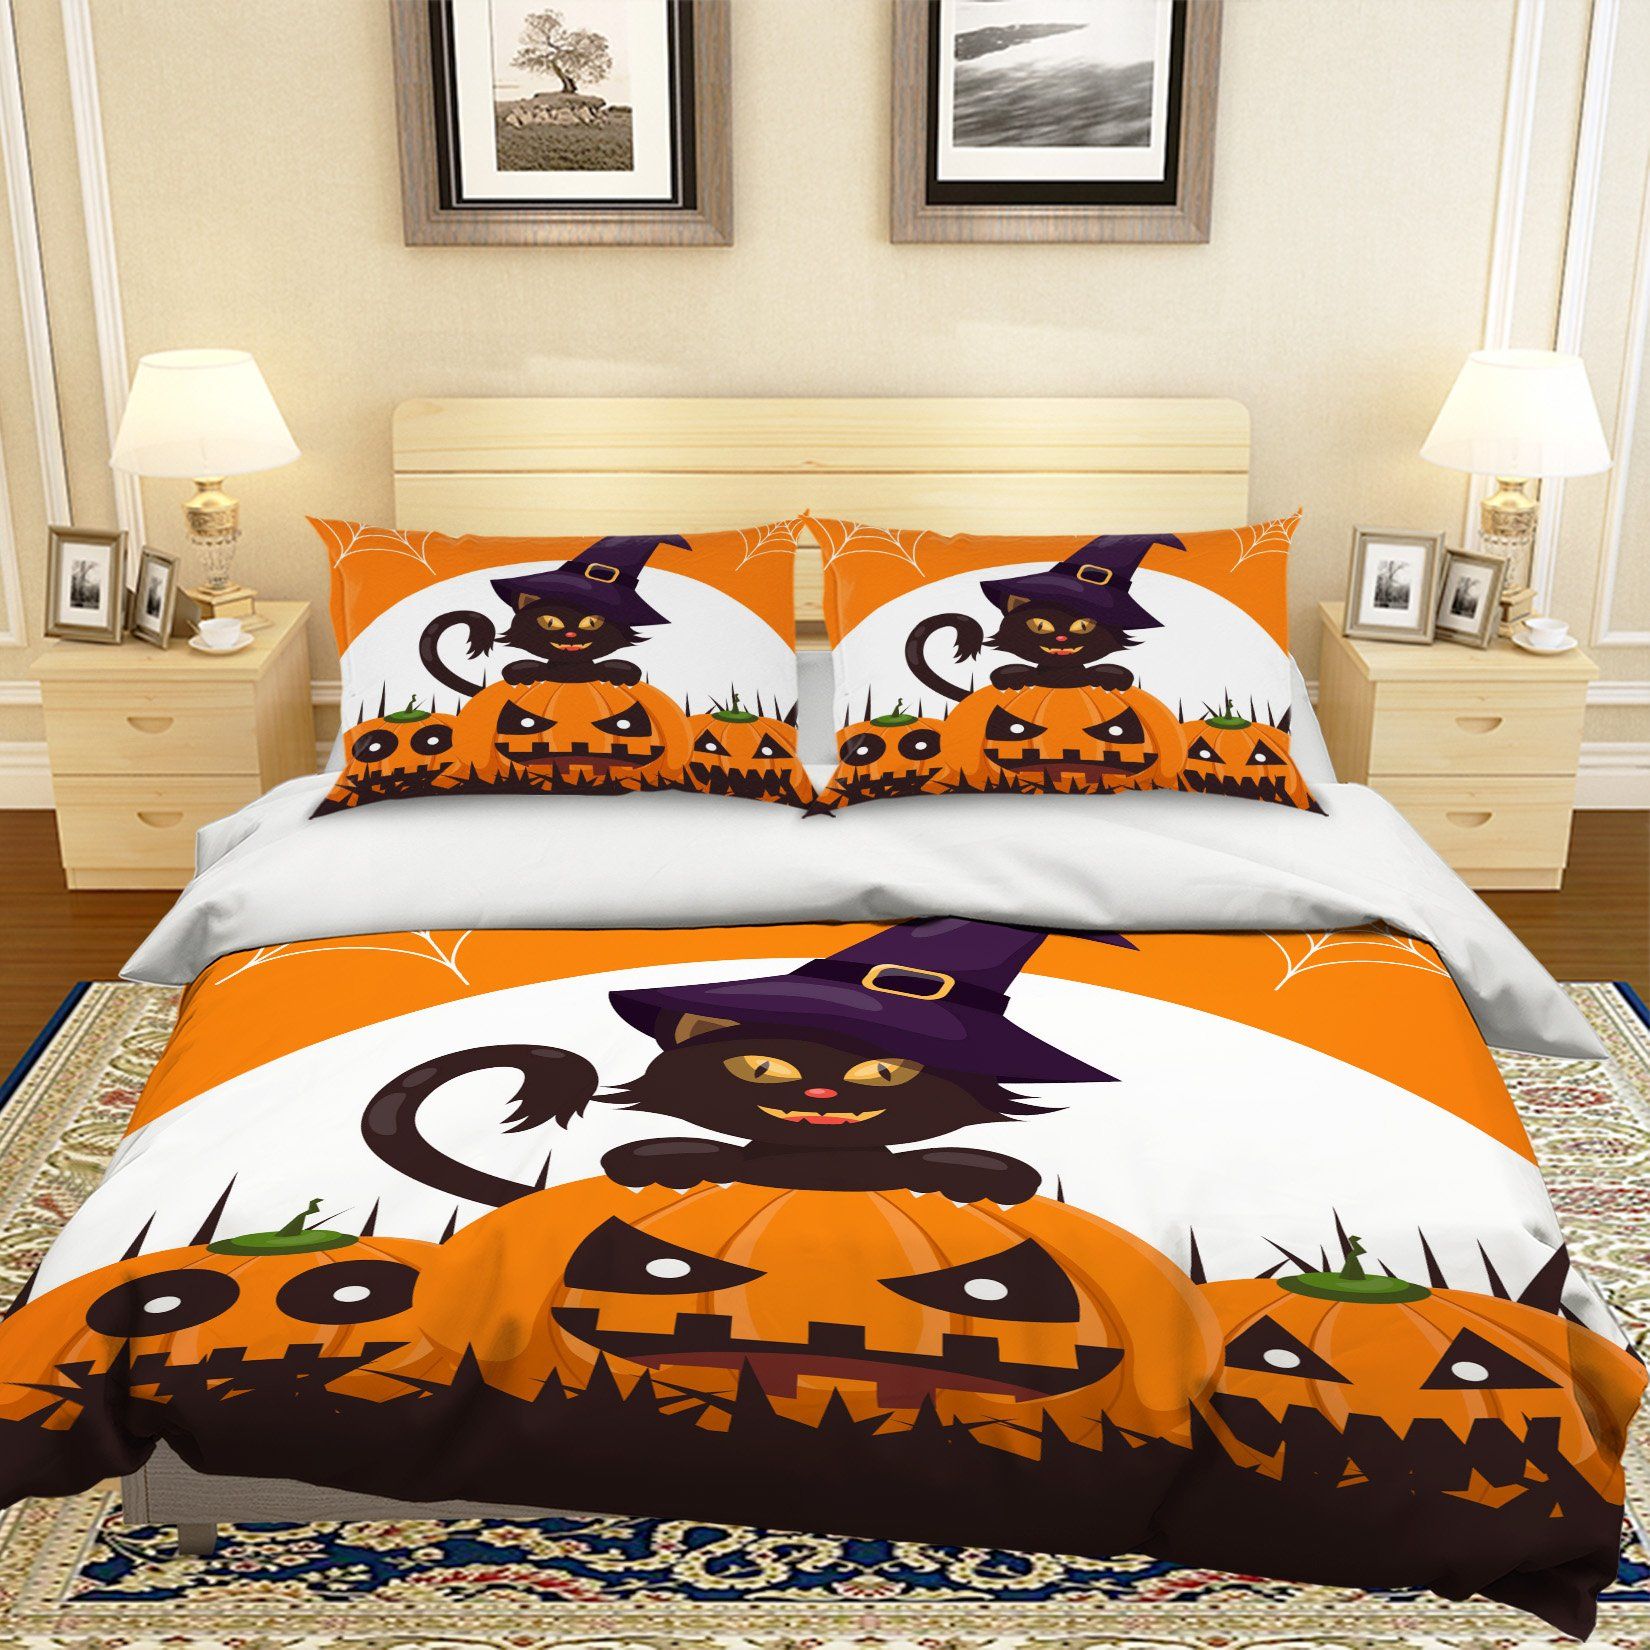 3D Black Cat Pumpkin 1210 Halloween Bed Pillowcases Quilt Quiet Covers AJ Creativity Home 